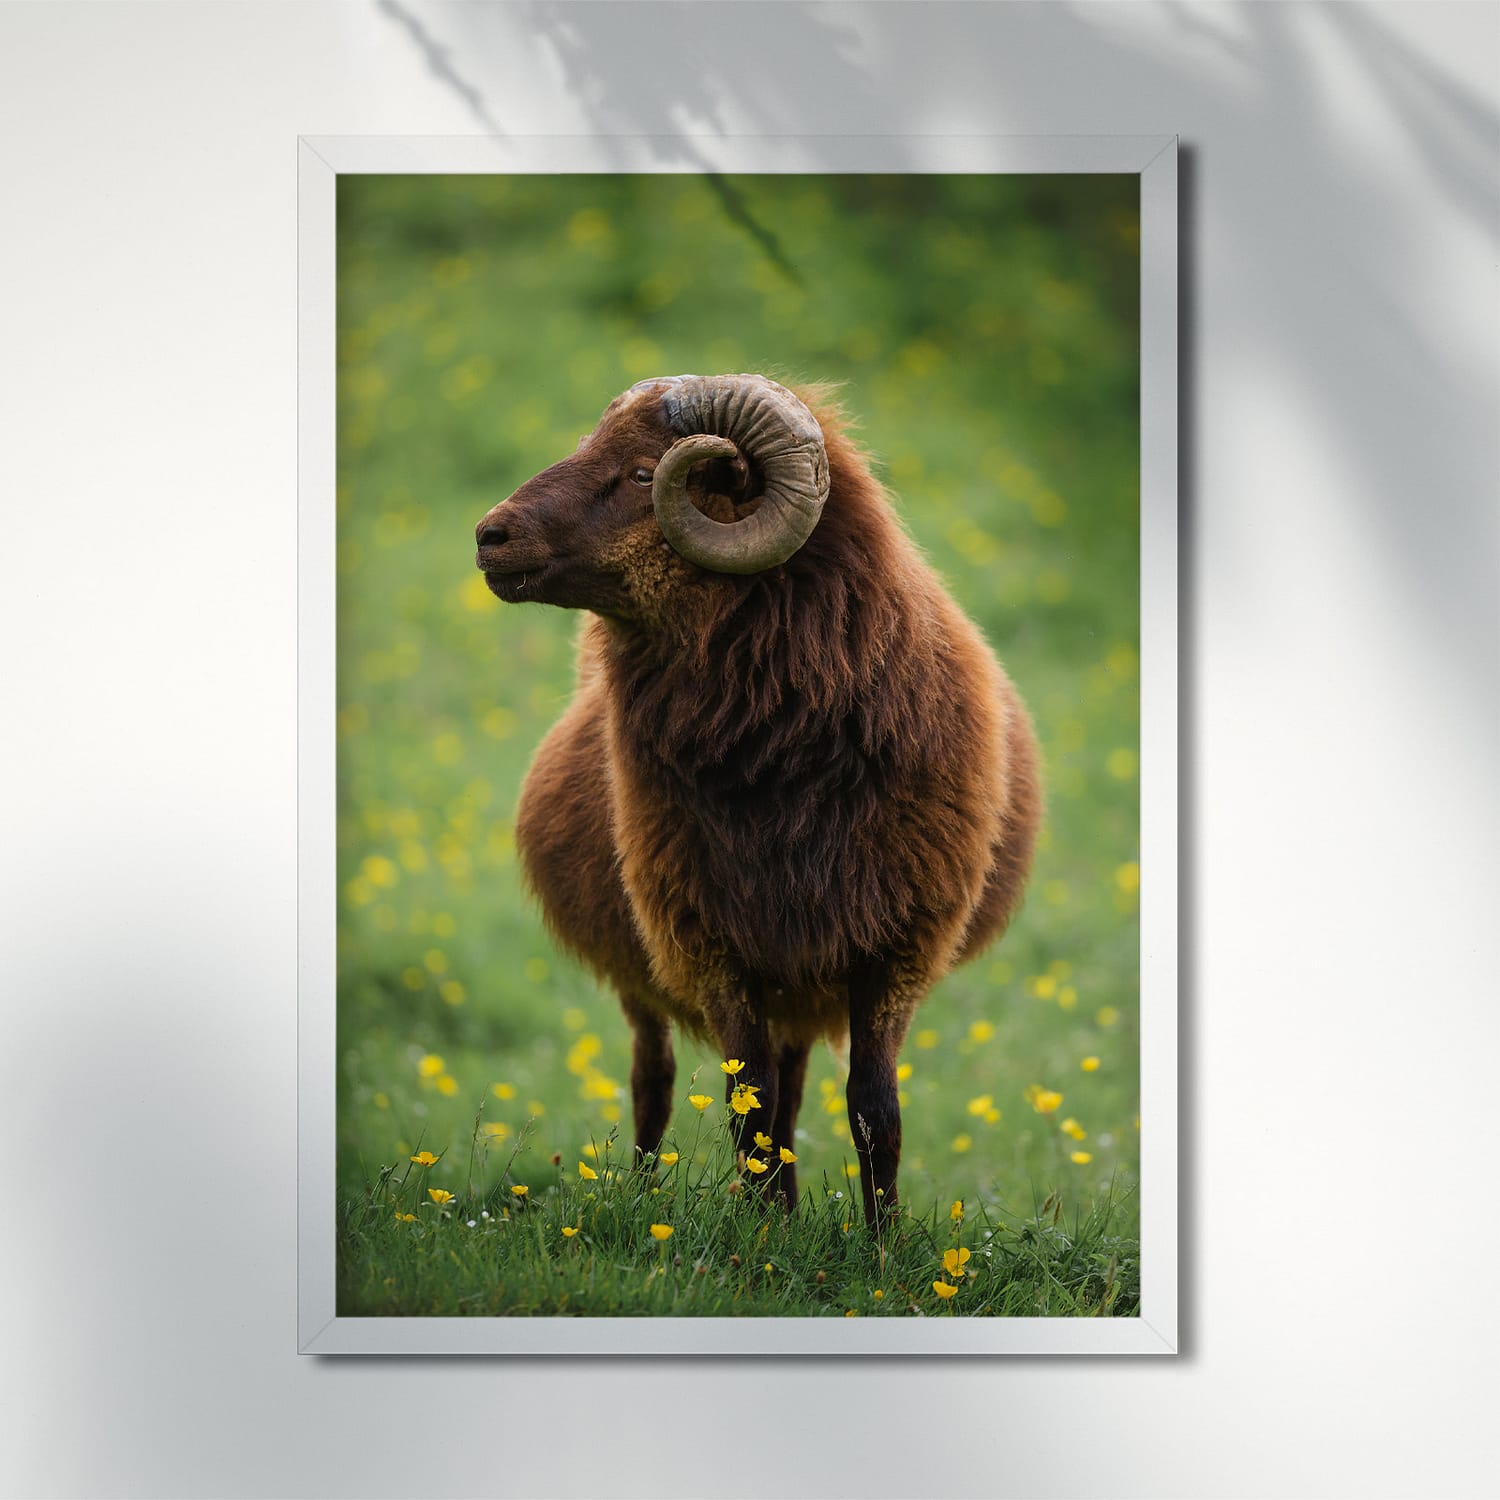 RAM PROFILE, FAROE ISLANDS - POSTER ram sheep profile poster frame